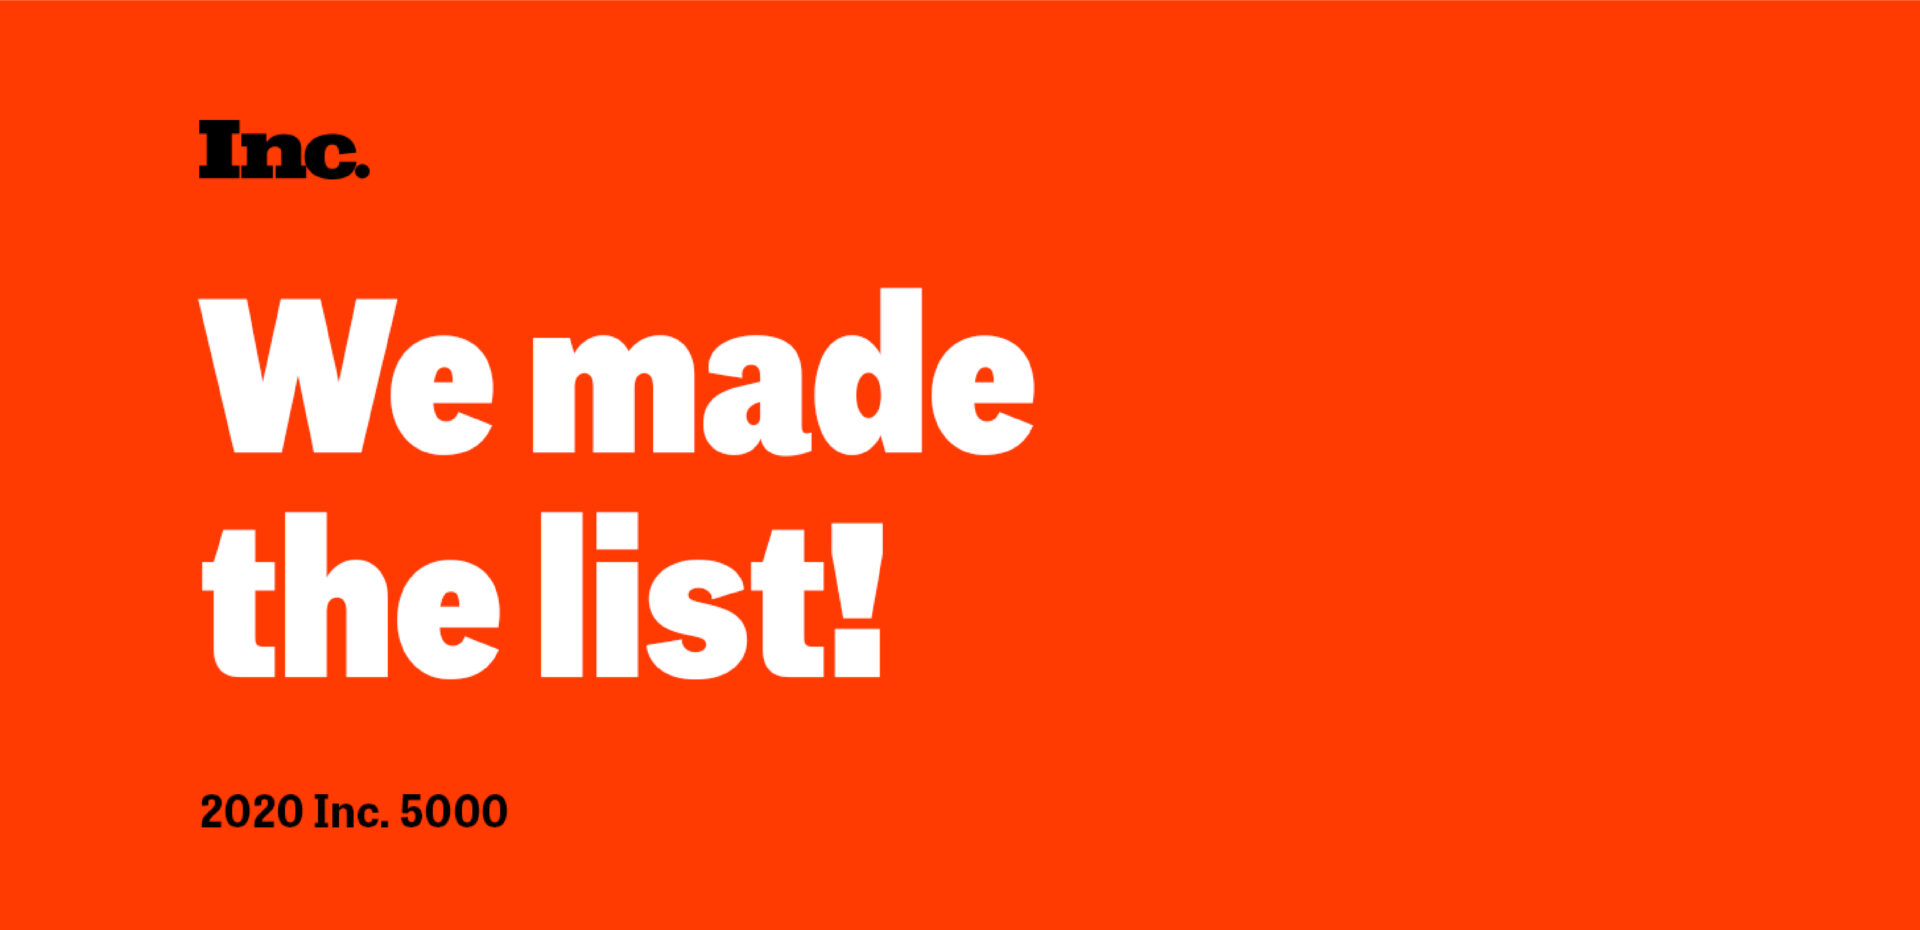 We made the list! 2020 Inc. 5000